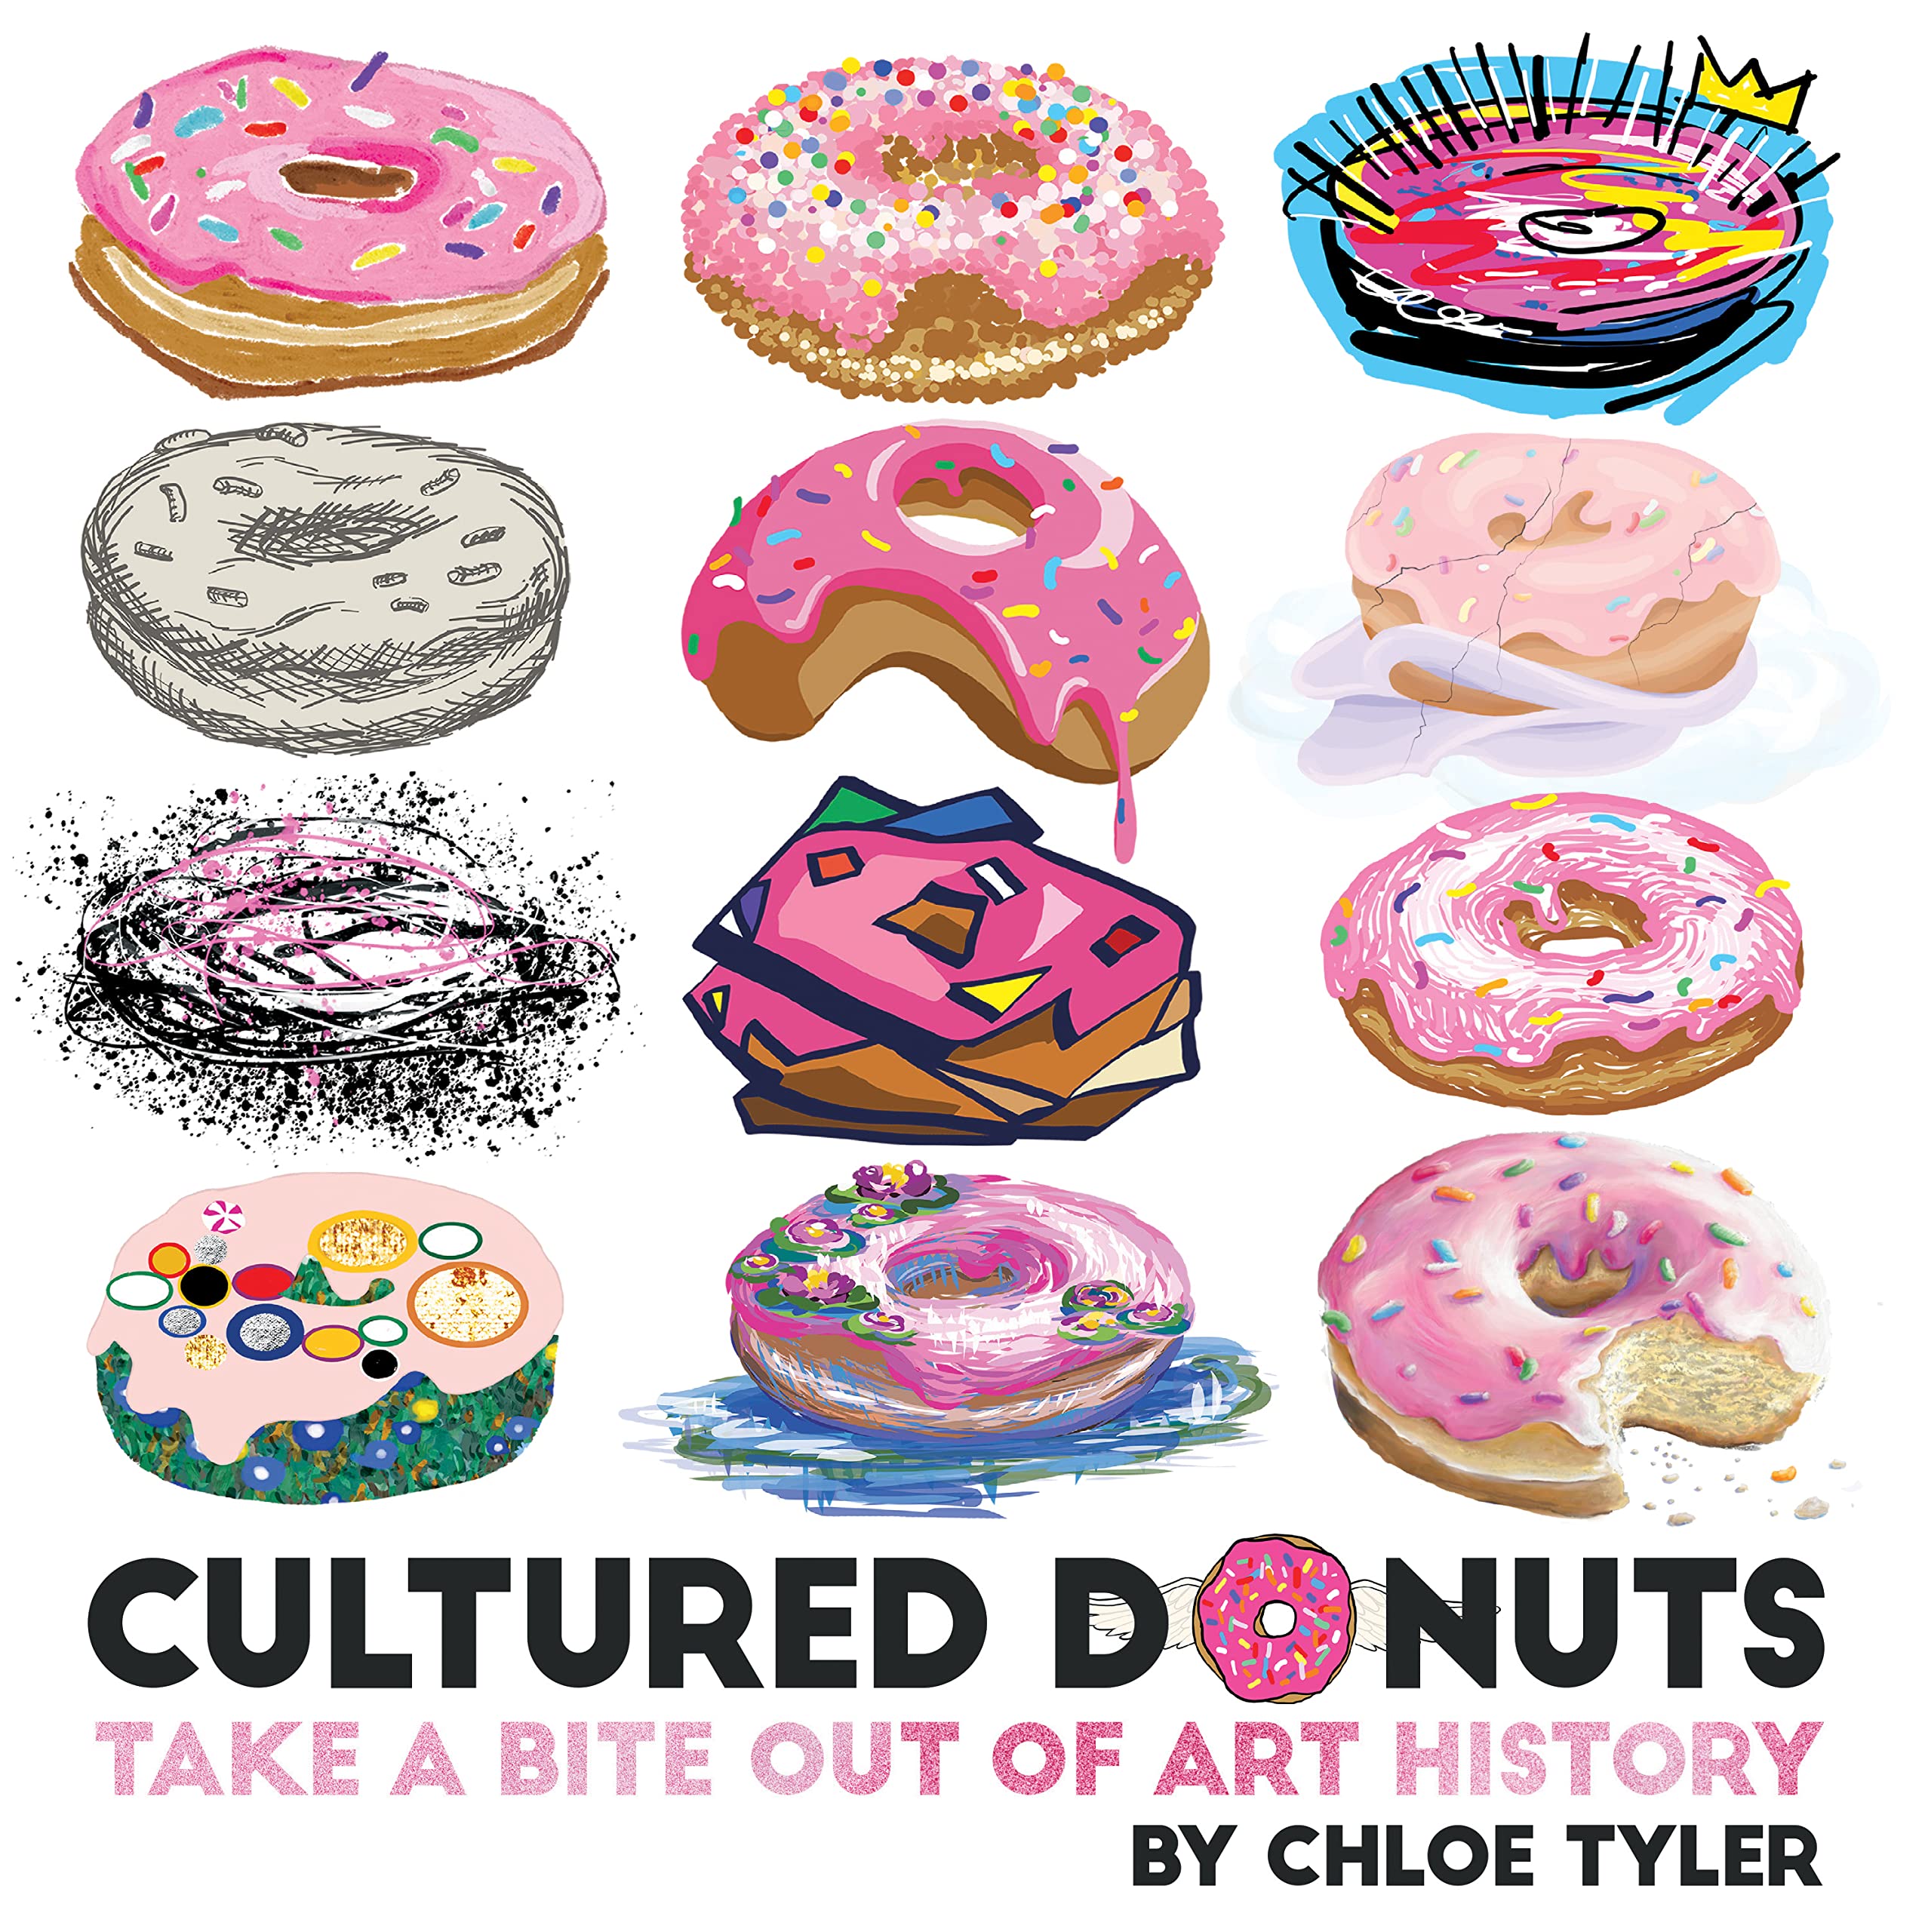 Cultured Donuts